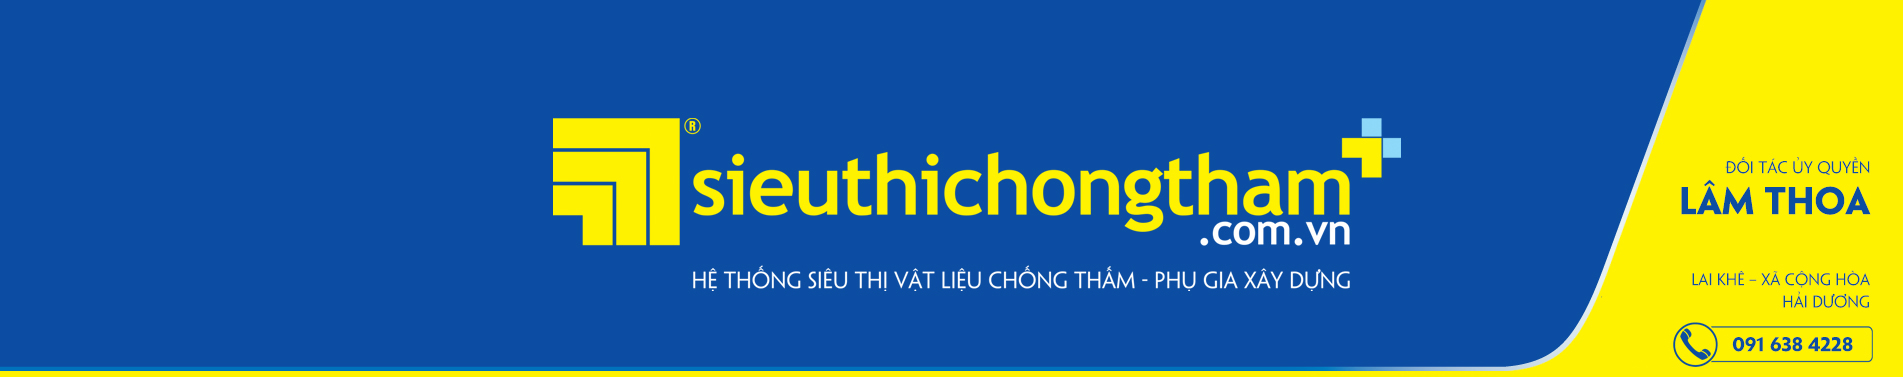 Lam Thoa Banner 2